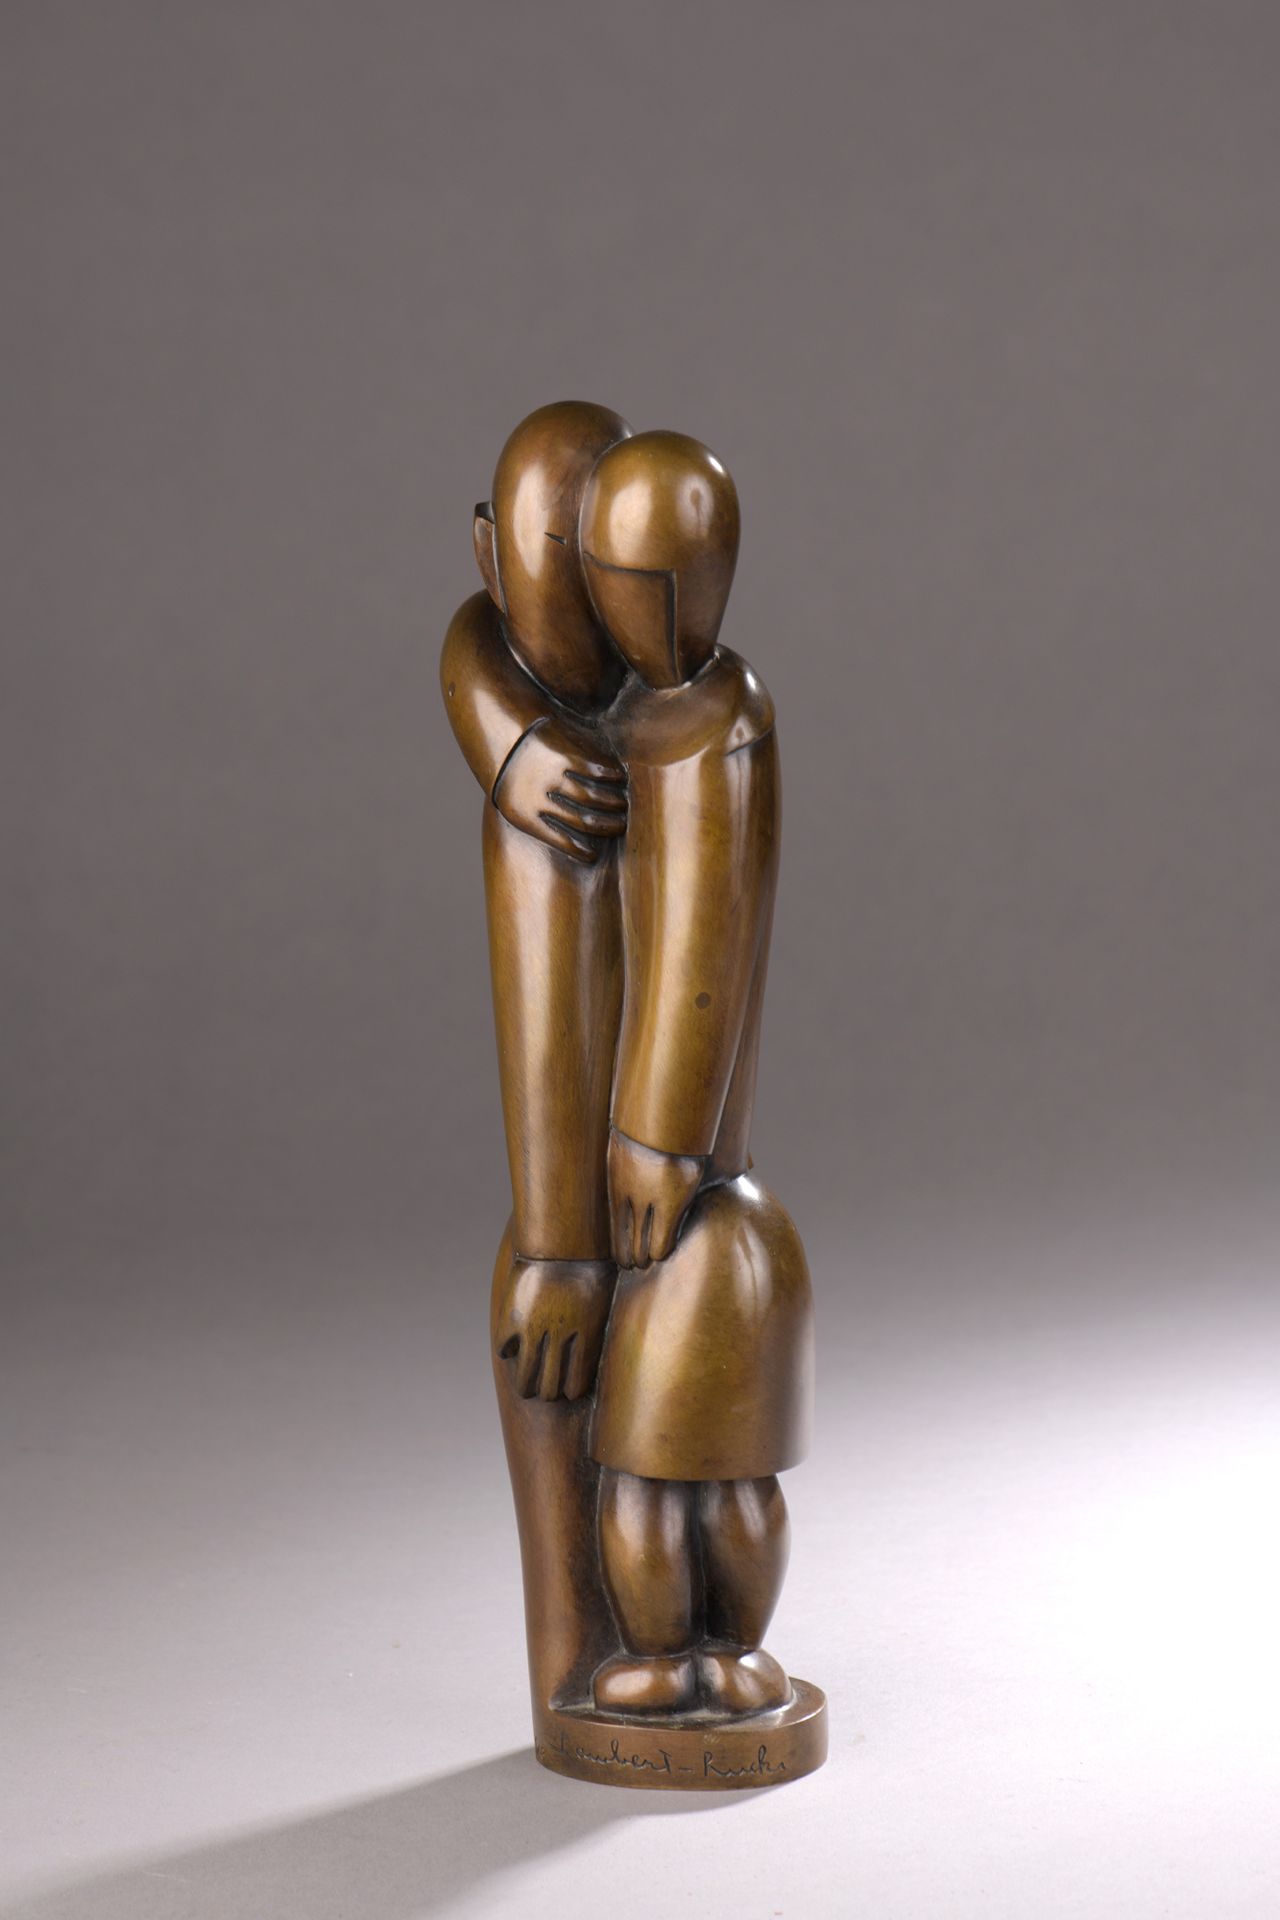 Null Jean LAMBERT-RUCKI (1888-1967)

Los amantes, 1923

Prueba en bronce dorado &hellip;